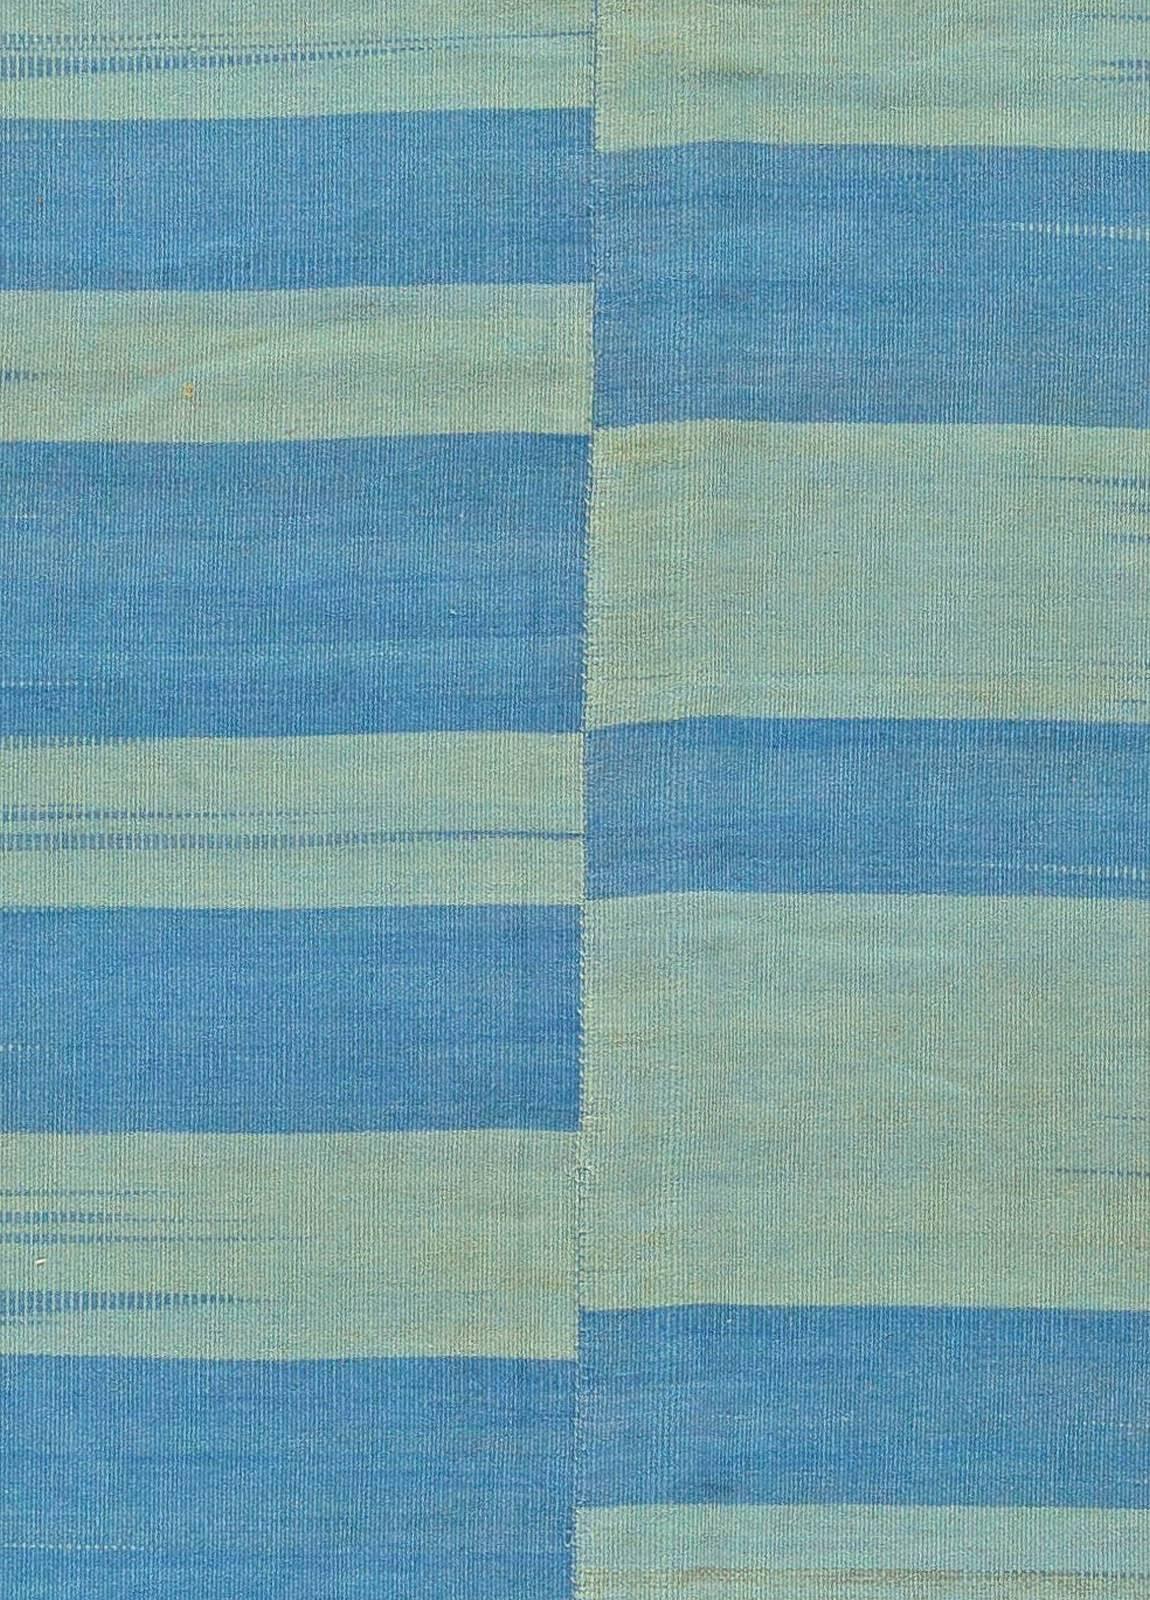 Contemporary blue handmade kilim rug by Doris Leslie Blau.
Size: 11.8